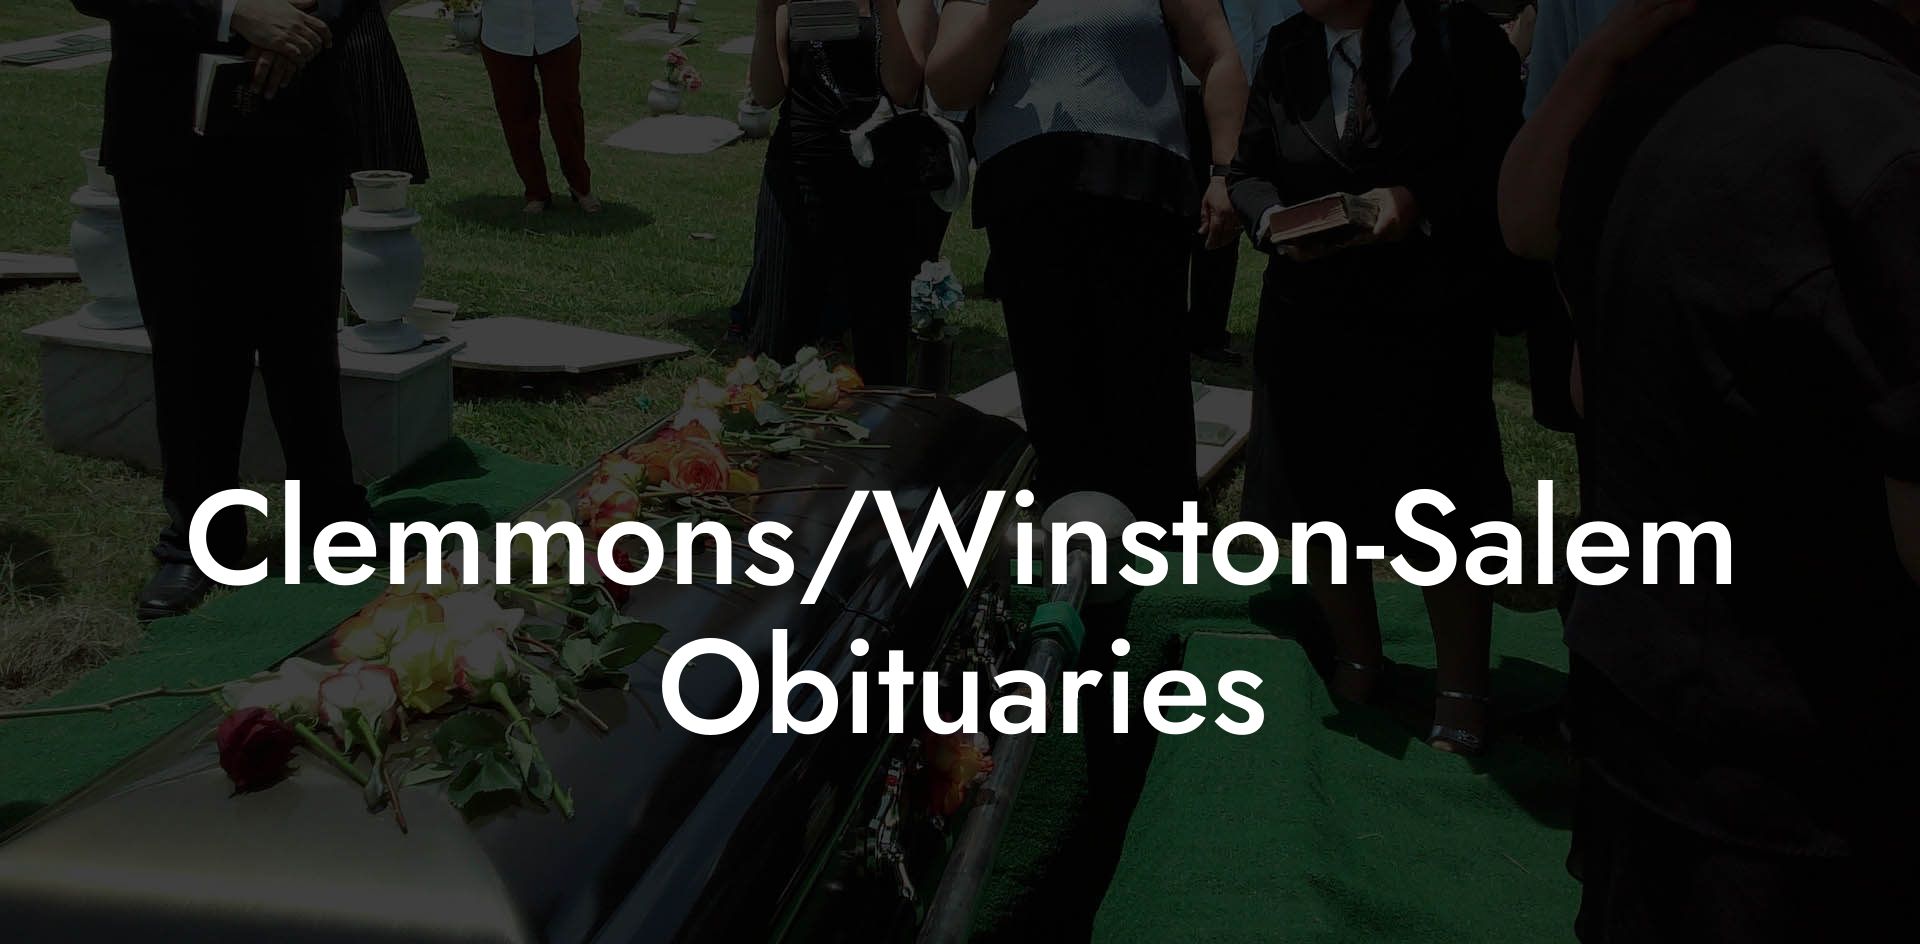 Clemmons/Winston-Salem Obituaries